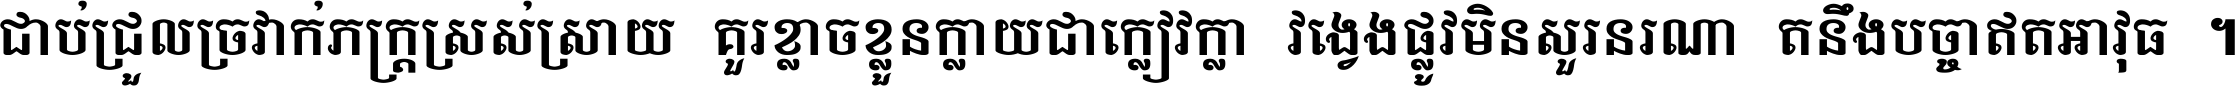 Khmer Mondulkiri A 5 Bold